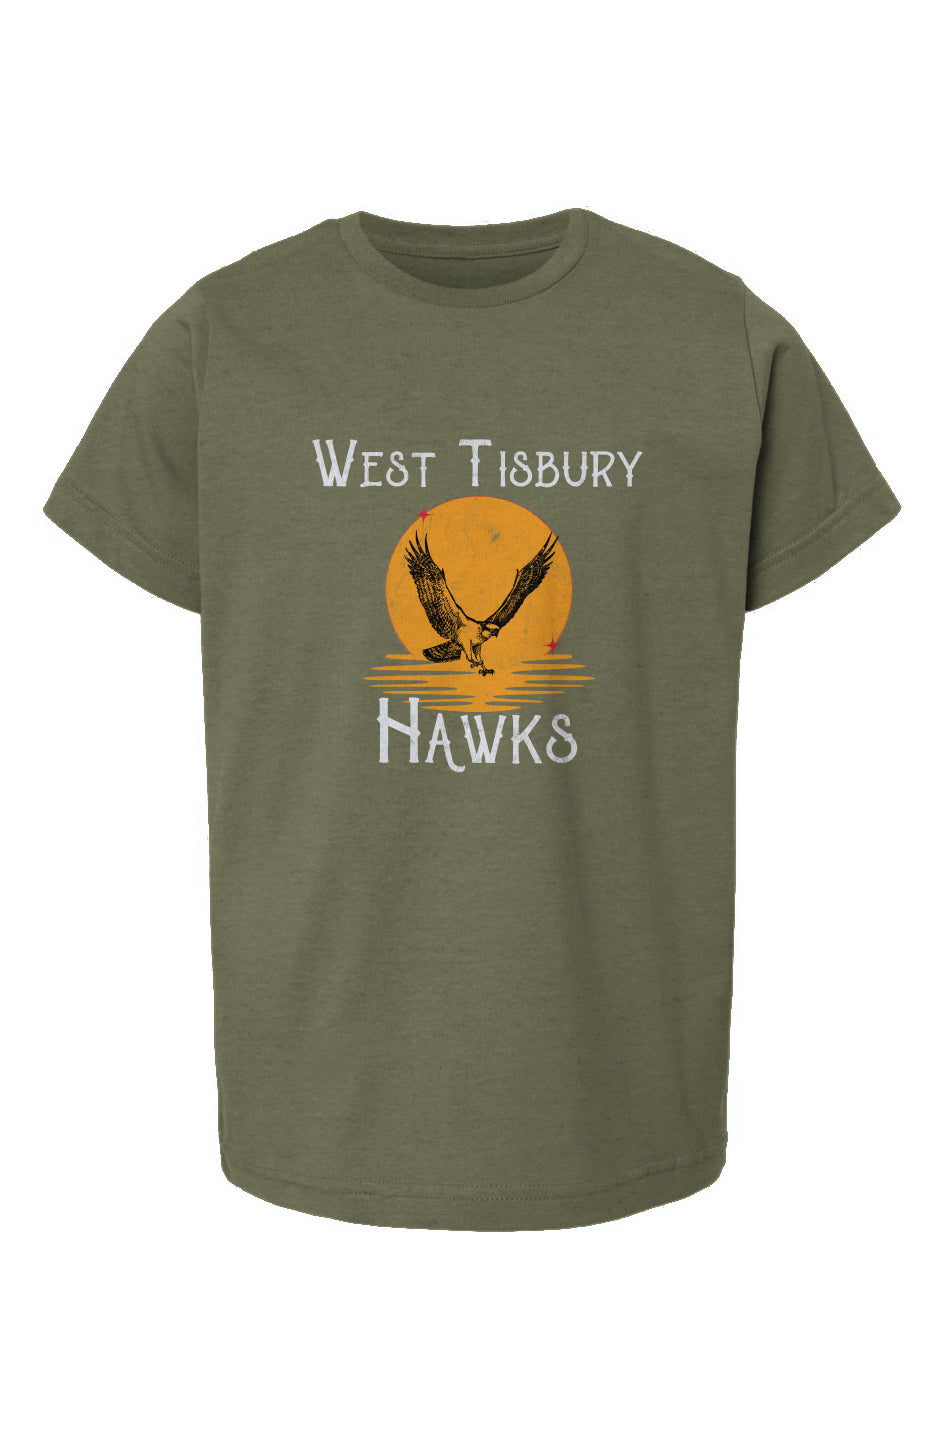 West Tisbury Hawks Youth Tee